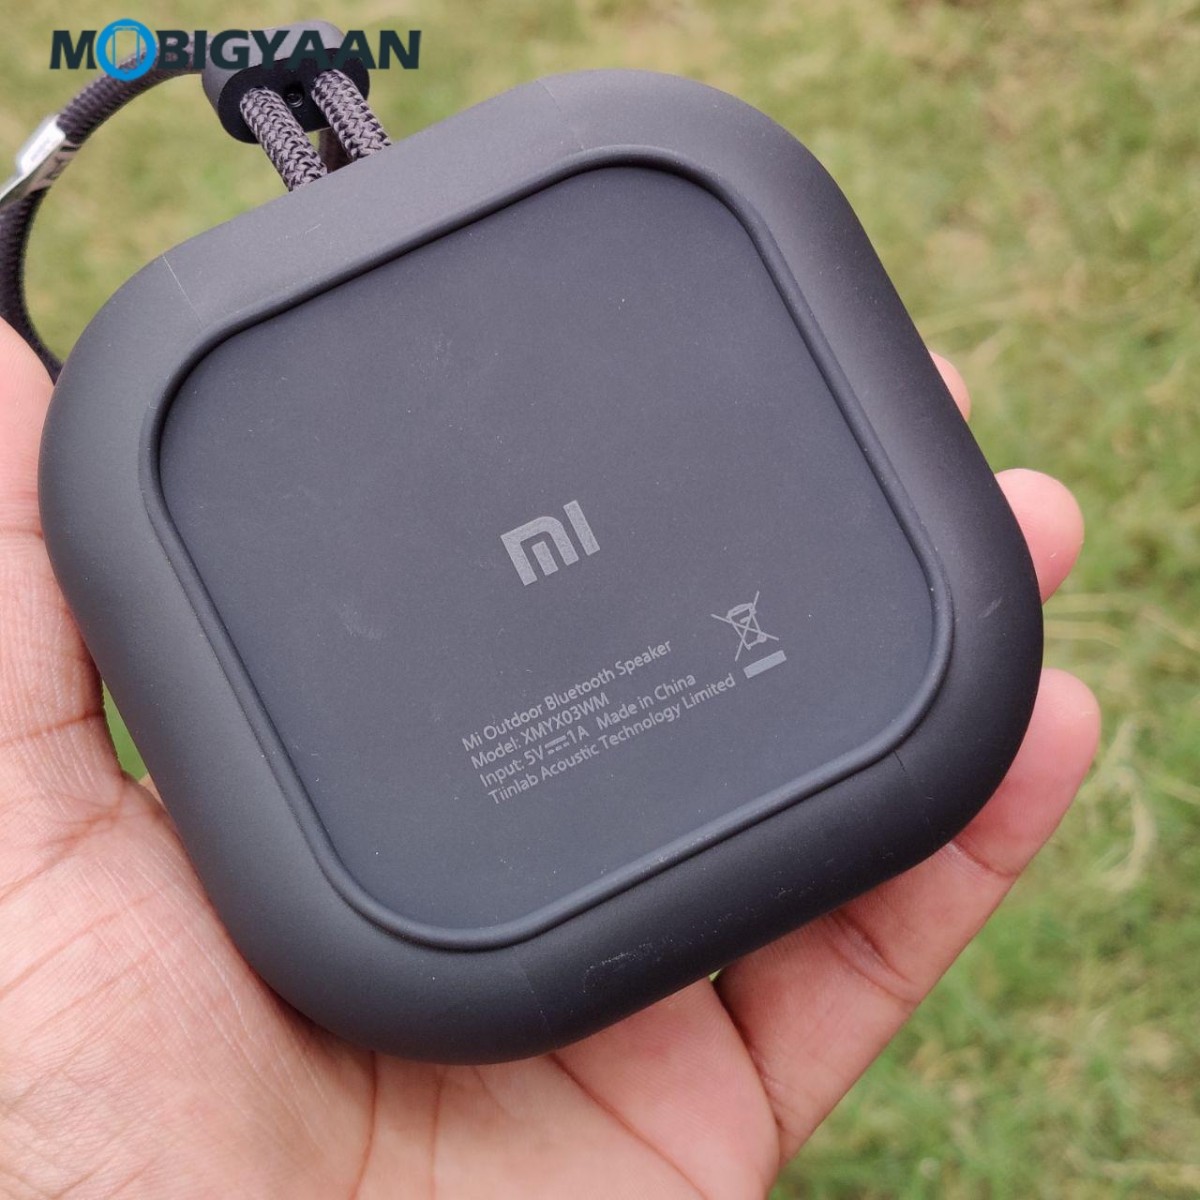 Mi Outdoor Bluetooth Speakers Hands On Review 4